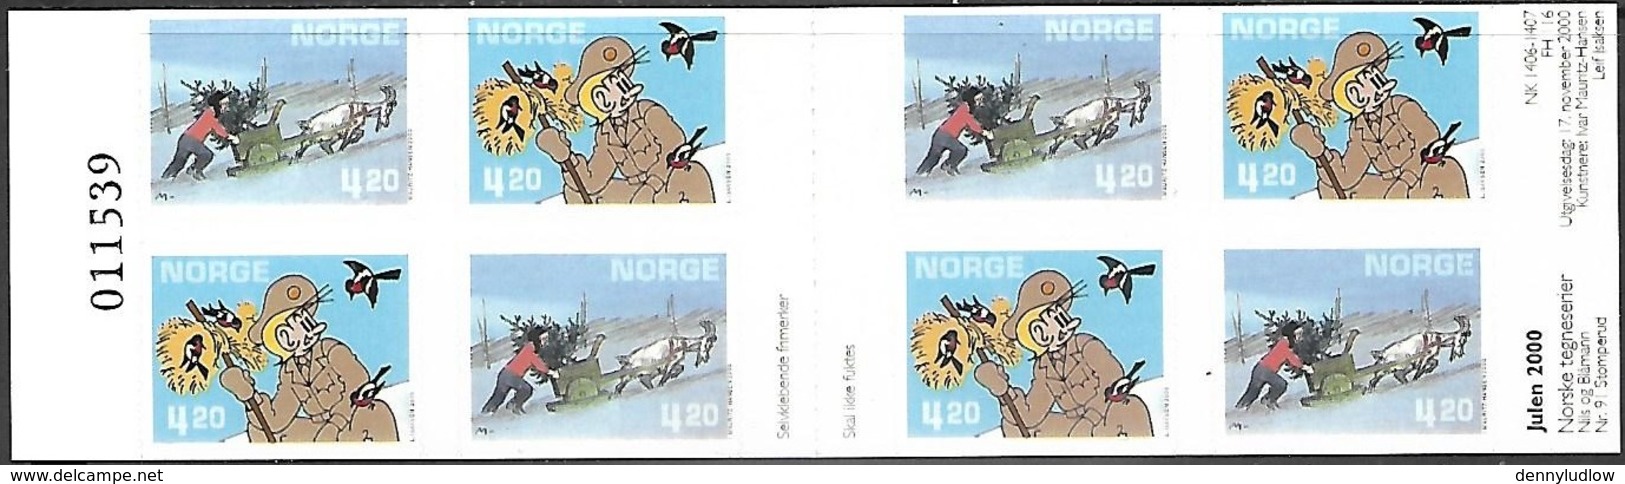 Norway   2000   Sc#1271b  Comics Booklet MNH   2016 Scott Value $12 - Booklets